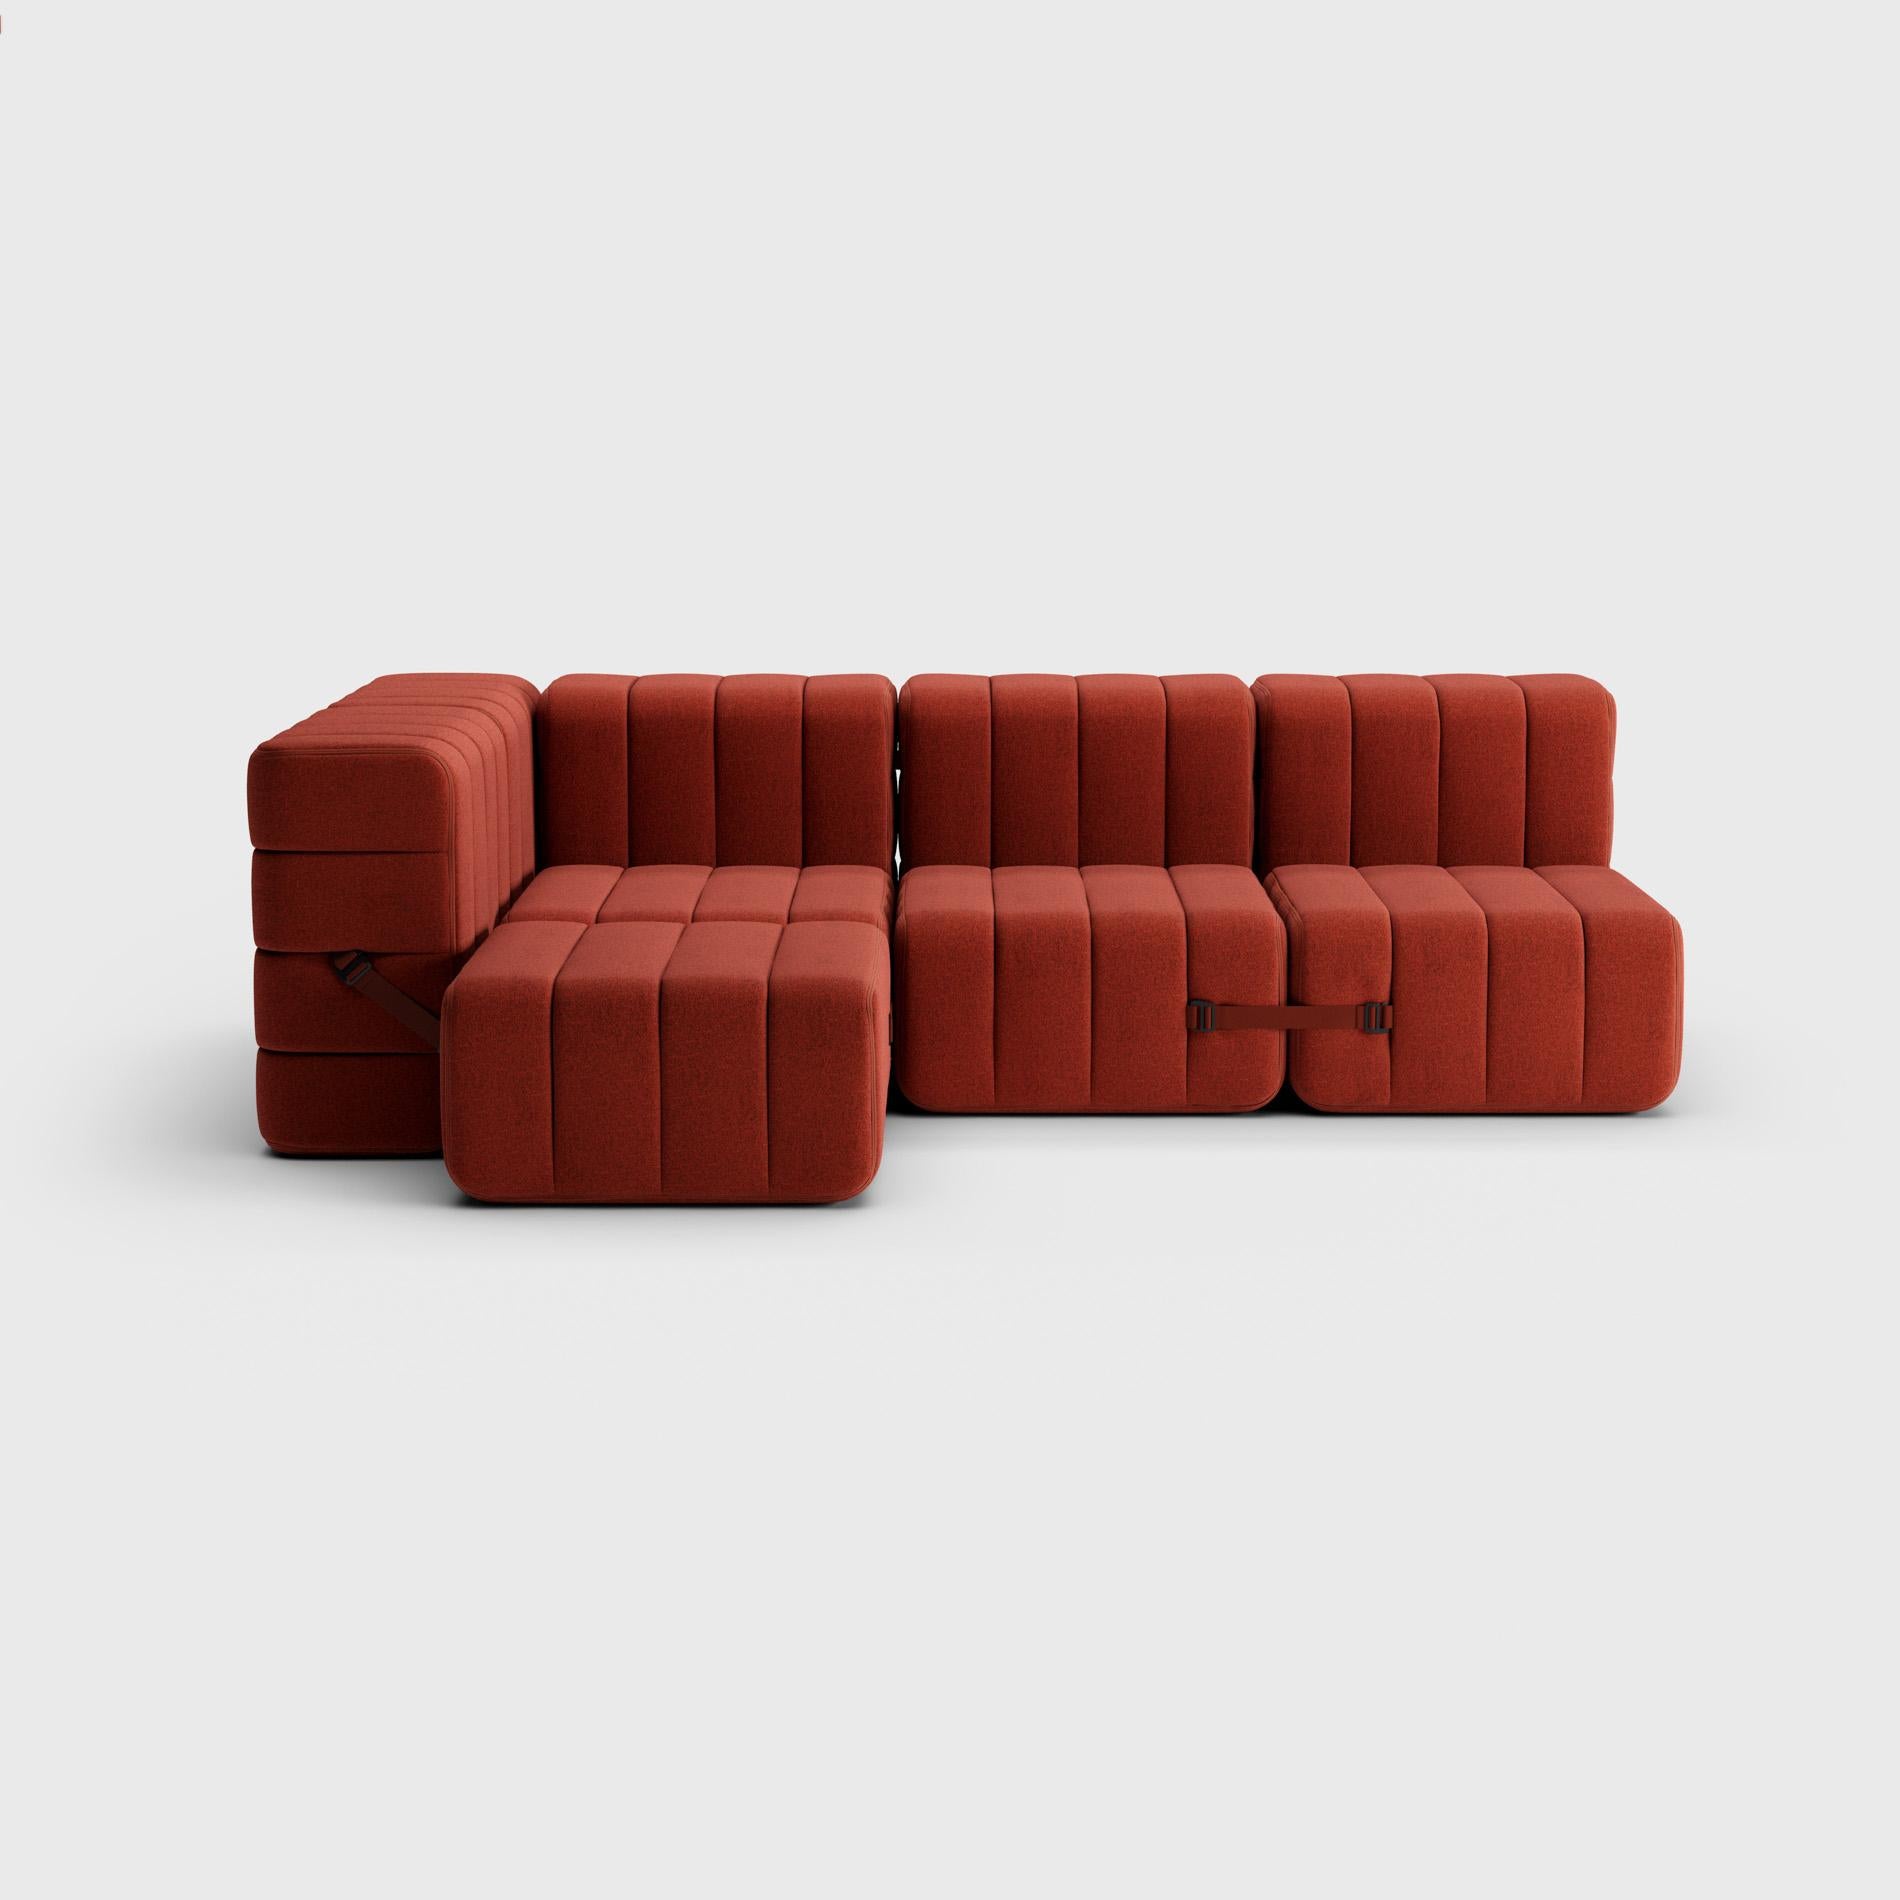 German Curt Single Module, Fabric Dama '0058 Red' - Curt Modular Sofa System For Sale